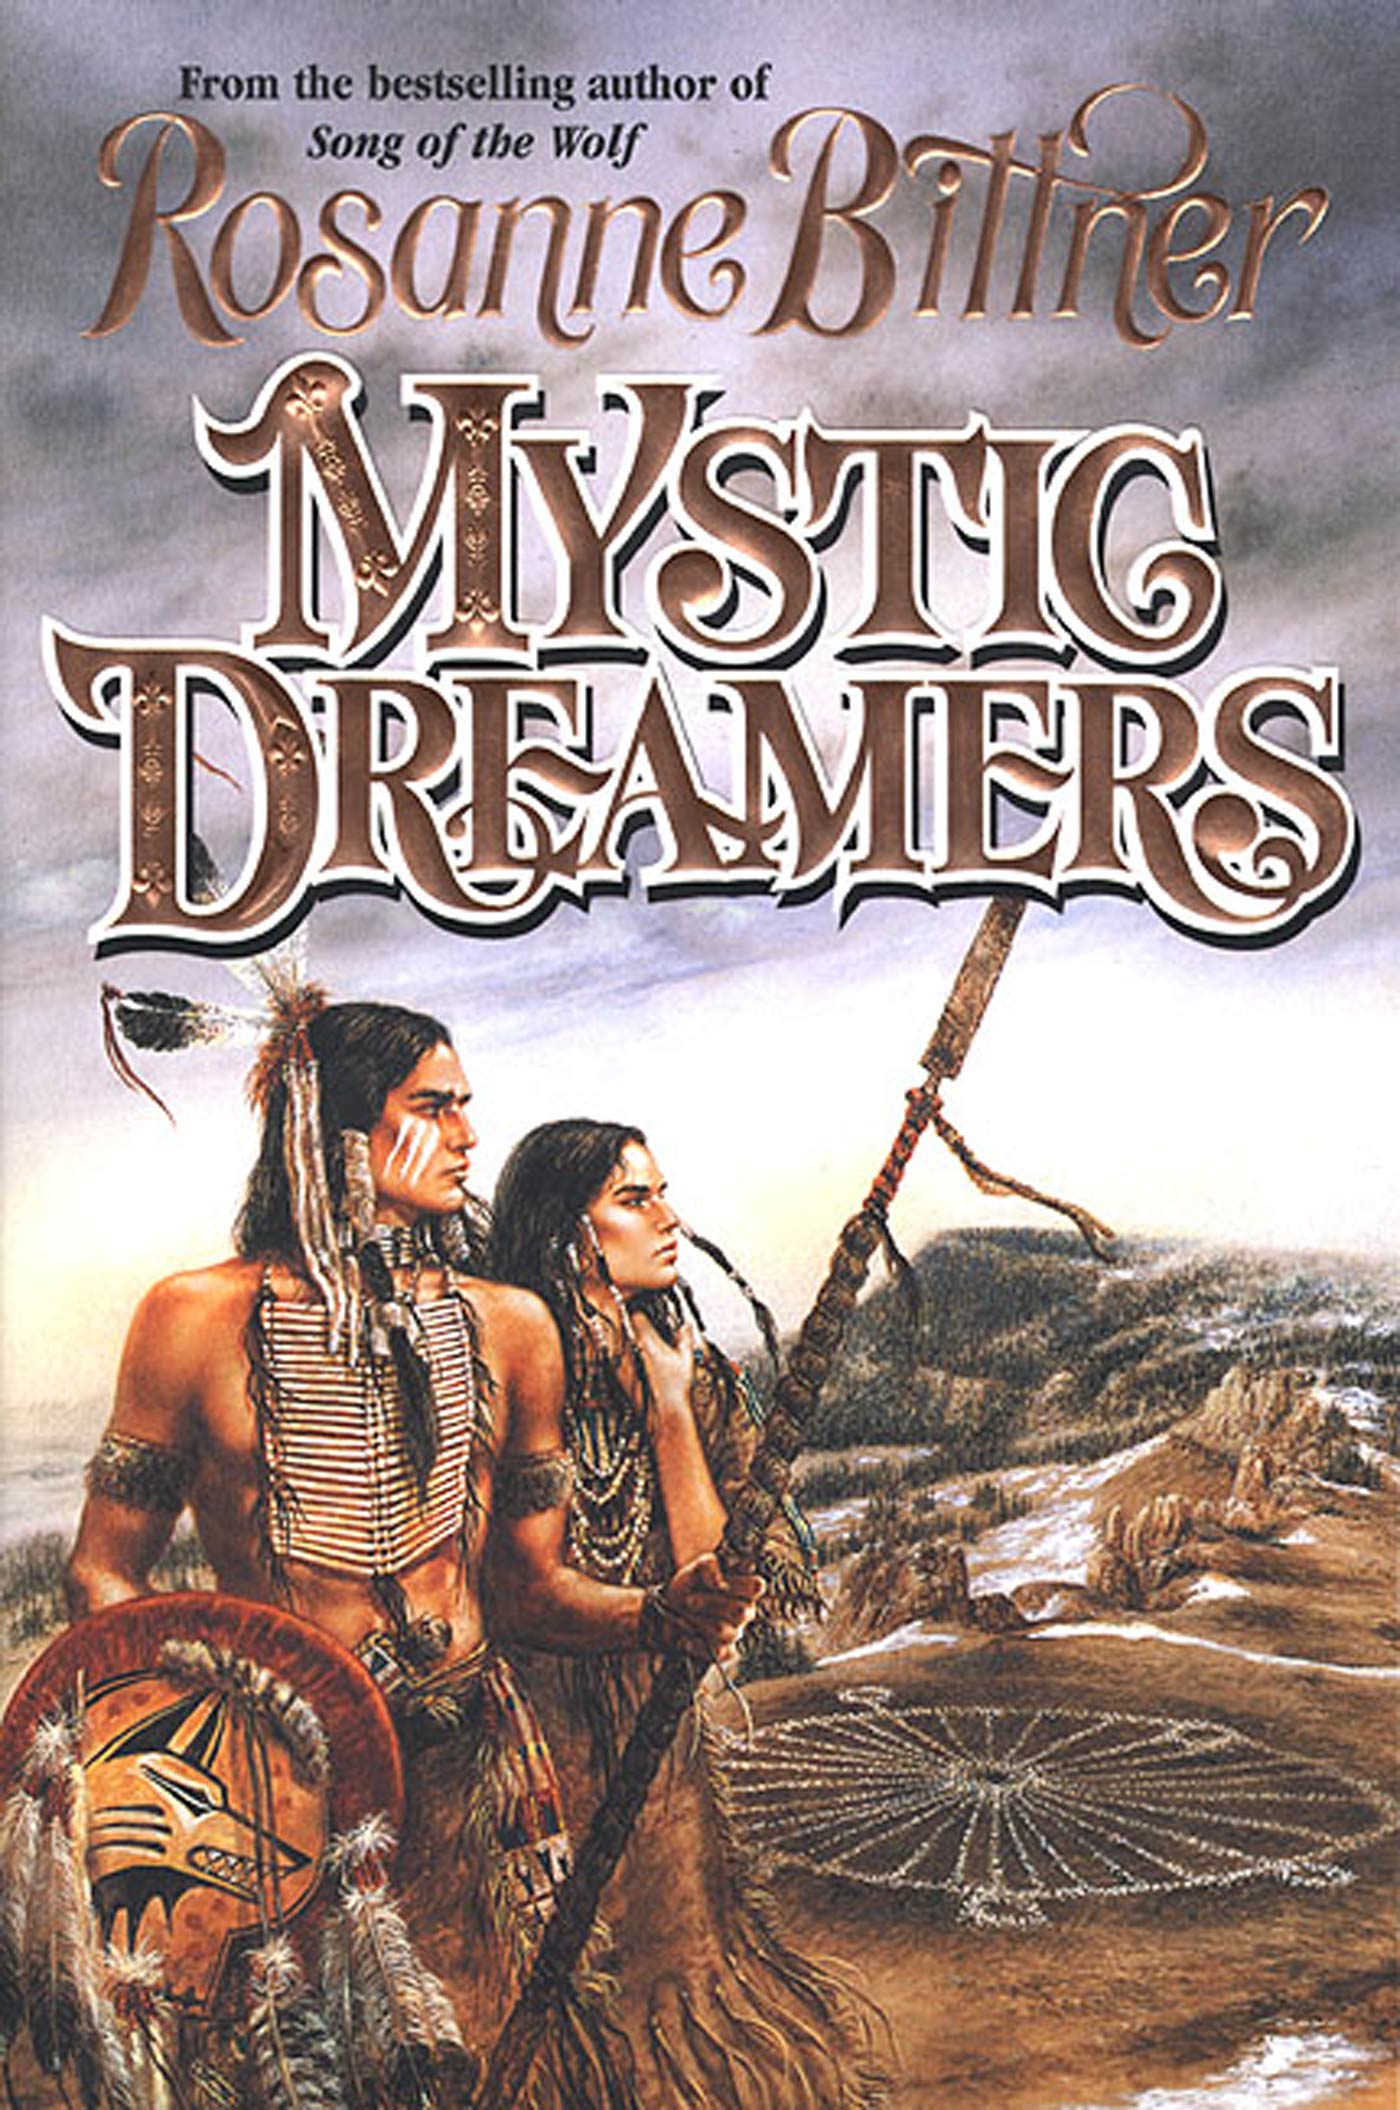 Mystic Dreamers by Rosanne Bittner